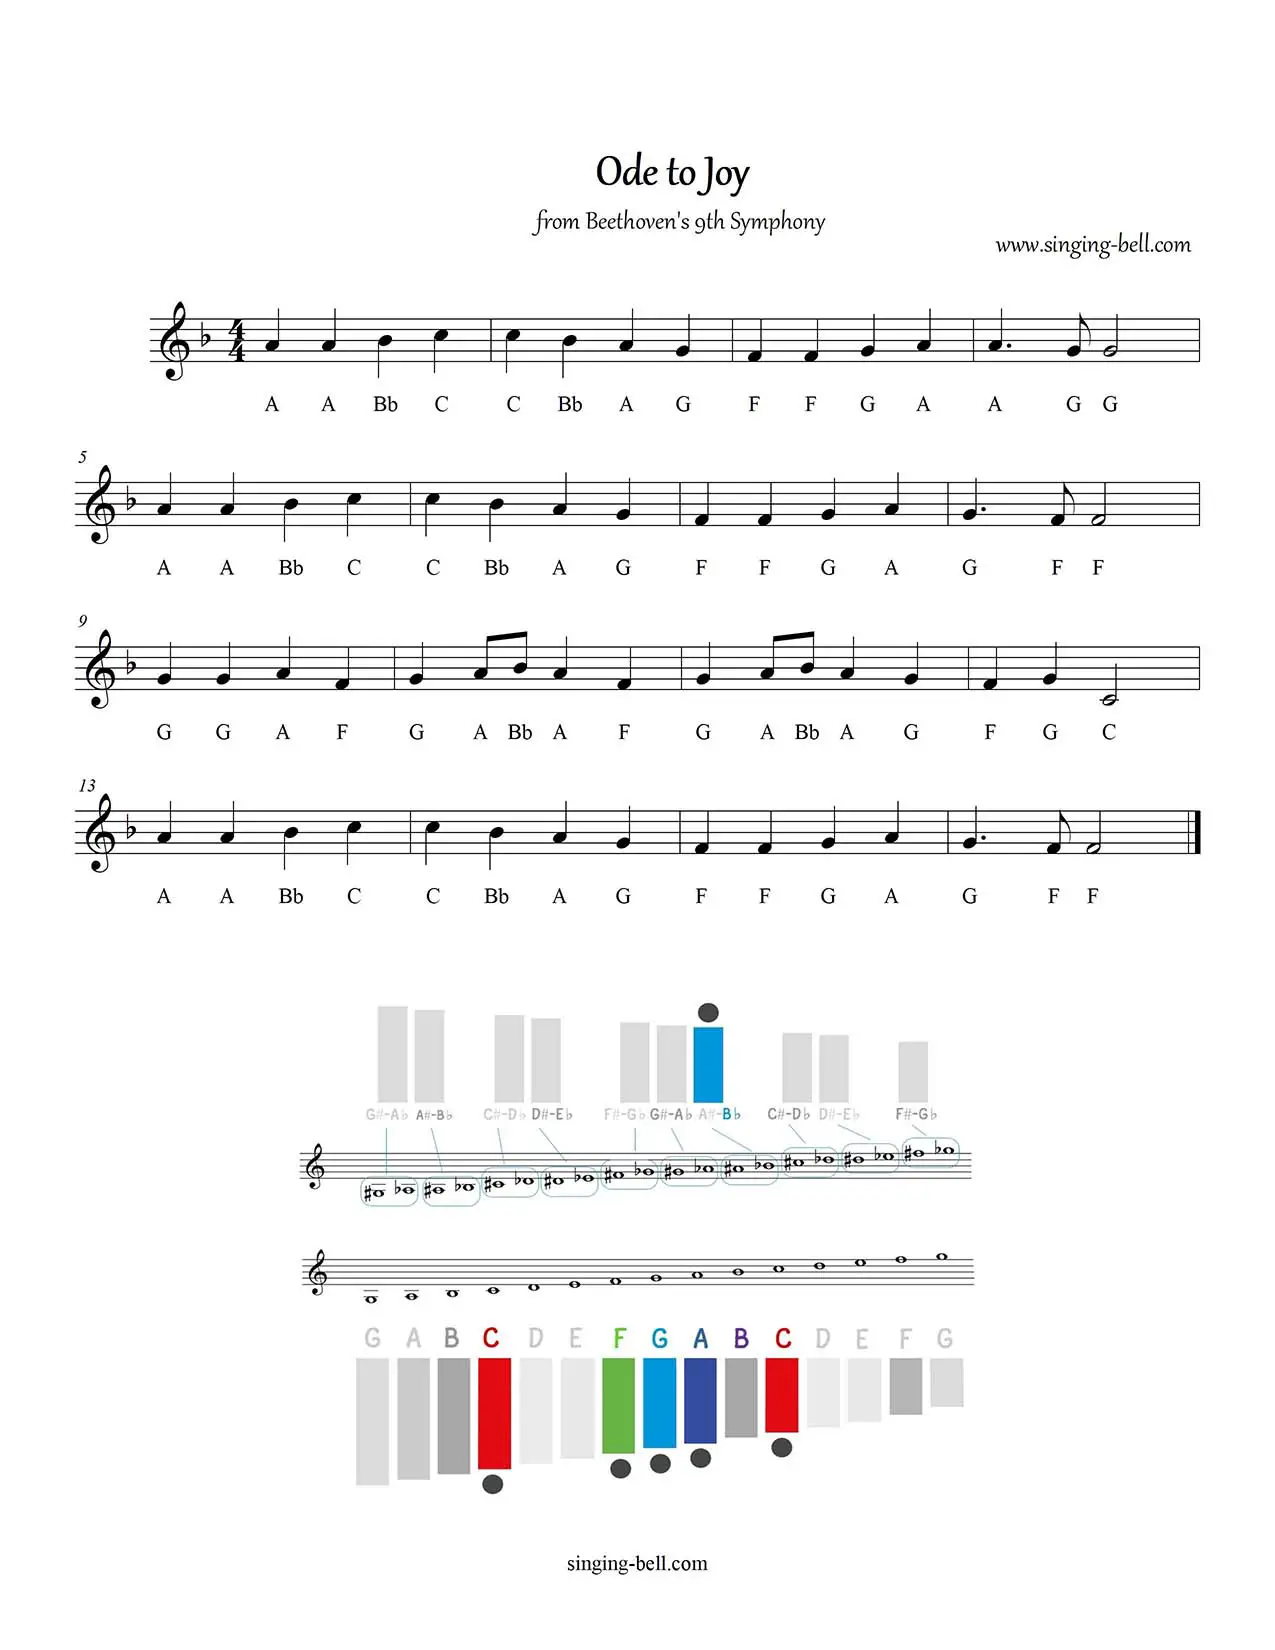 Ode To Joy free xylophone glockenspiel sheet music notes chart pdf in F